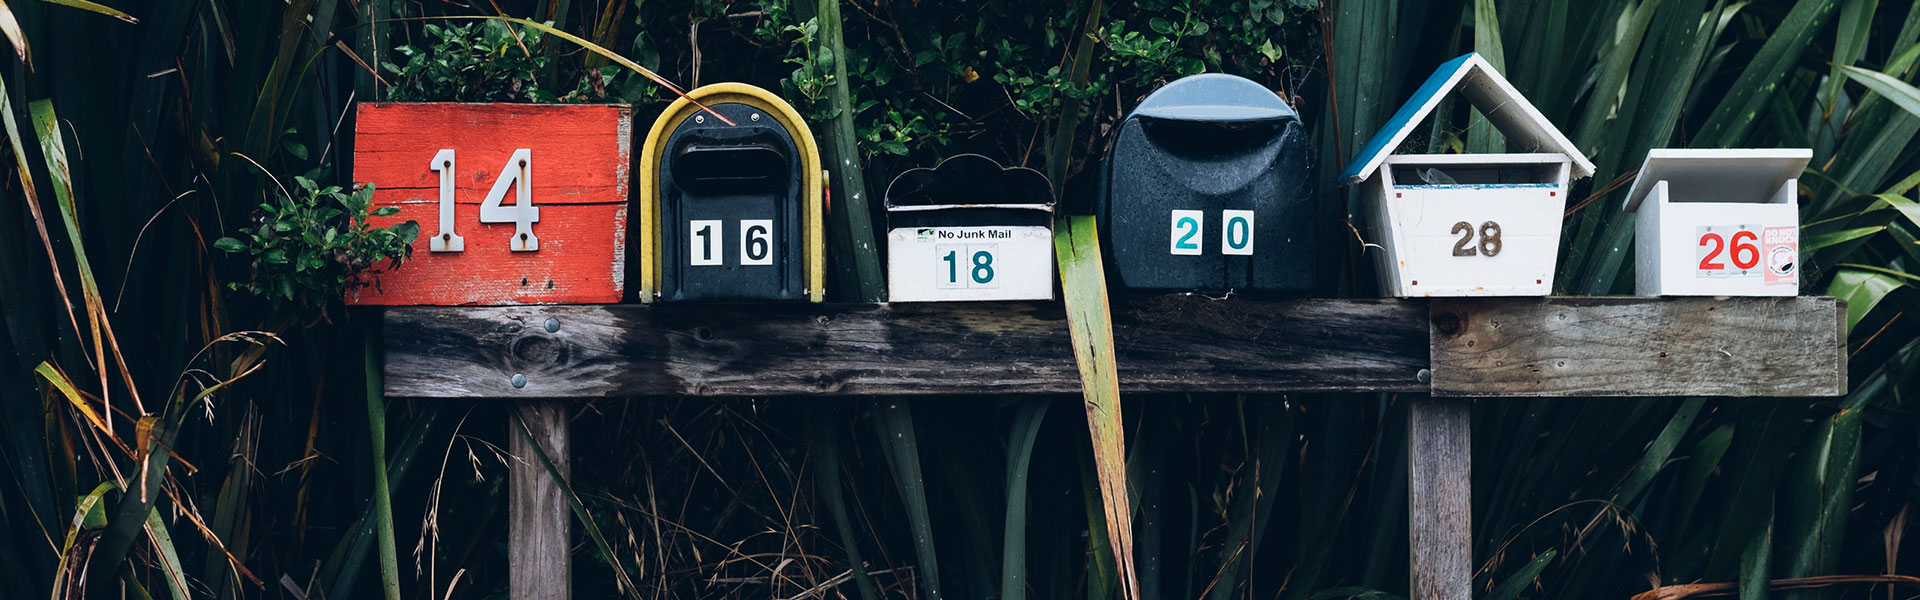 Mailbox Near Me – Find the Closest Mailbox